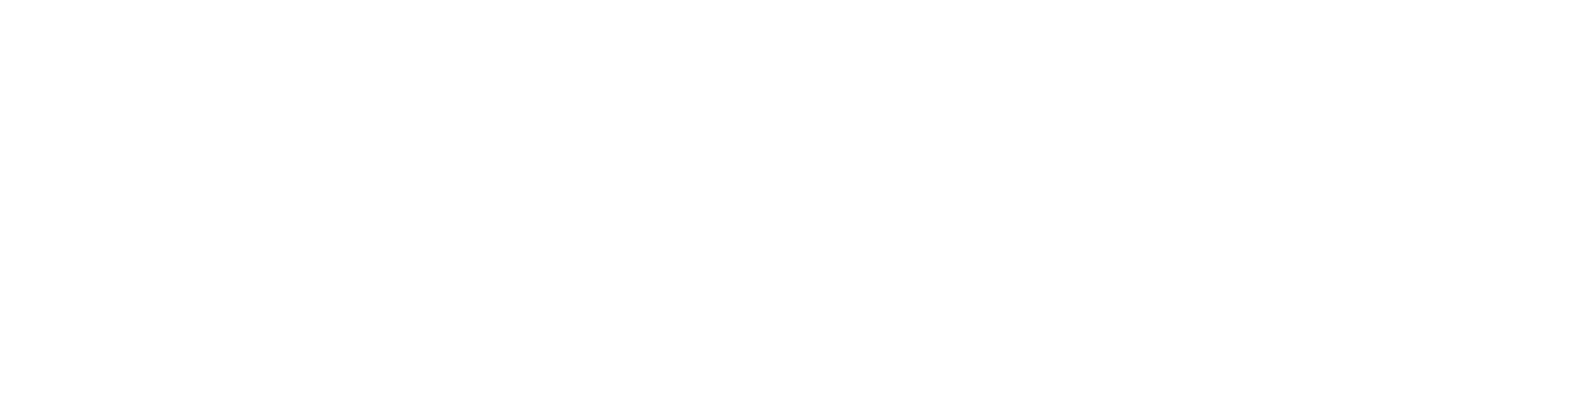 PropertyGuru logo grand pour les fonds sombres (PNG transparent)